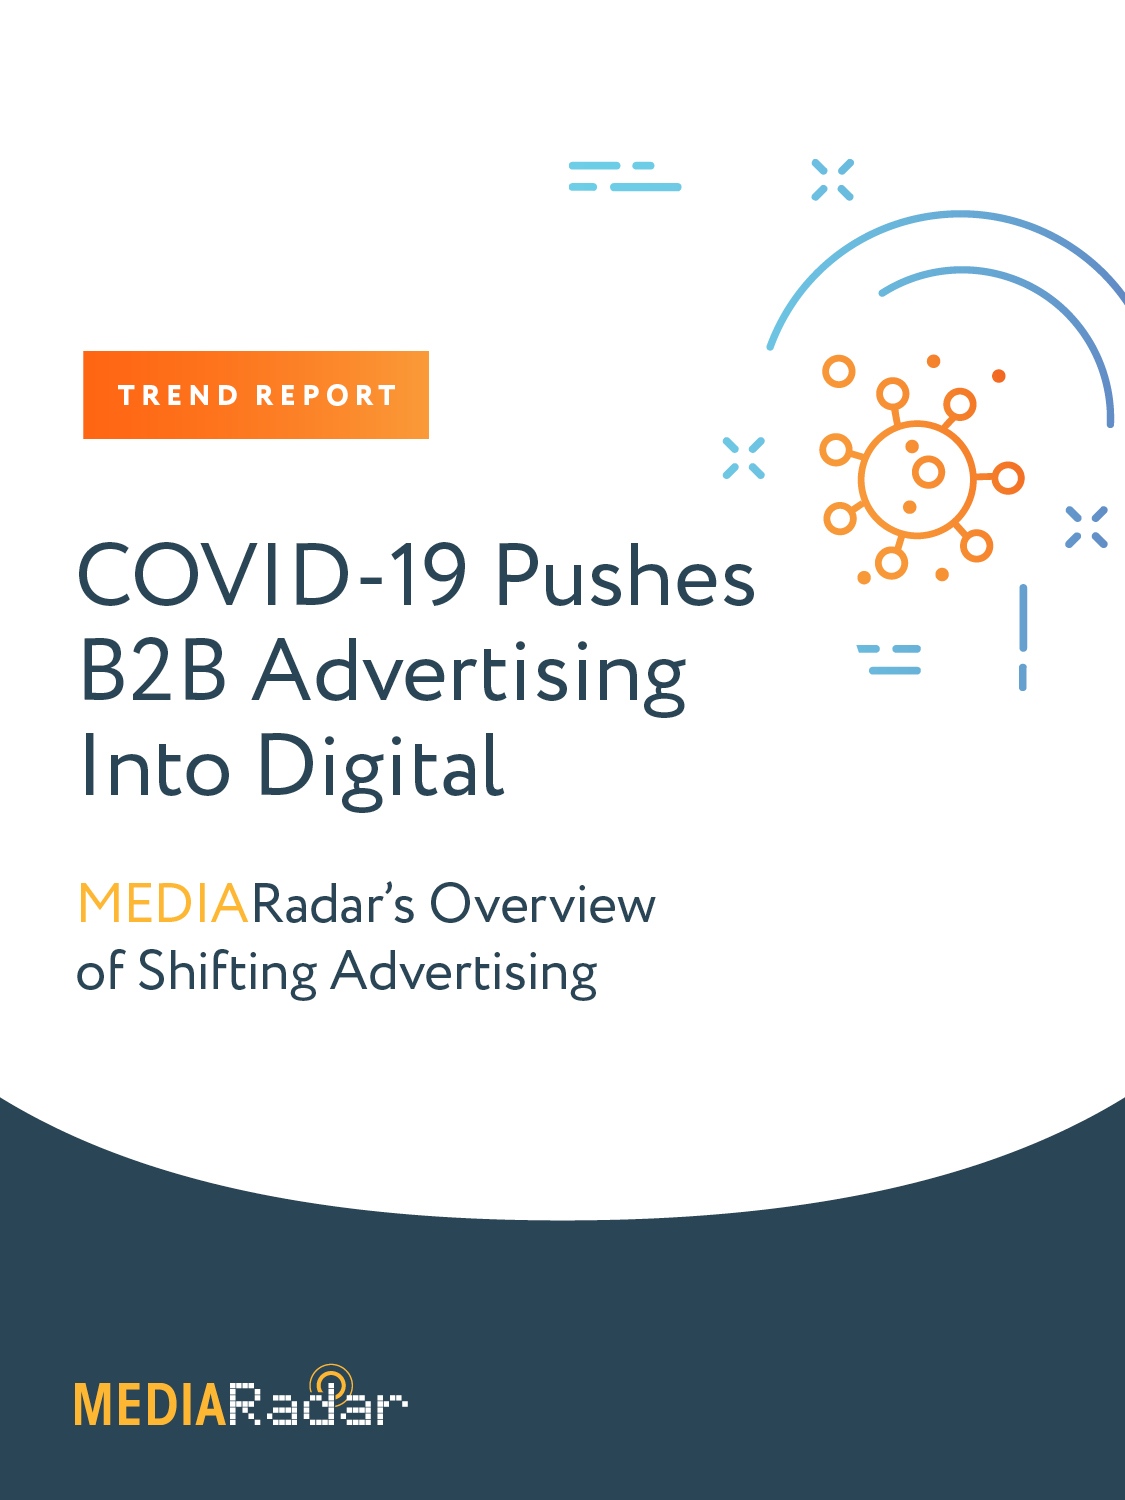 COVID-19 Pushes B2B Advertising into Digital